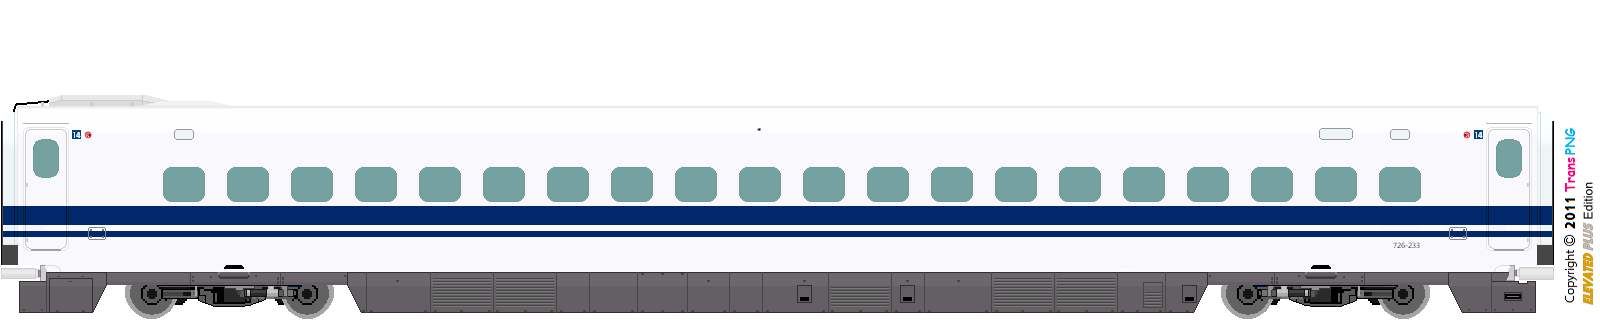 [9010] Central Japan Railway 52287846254_f257de1478_o